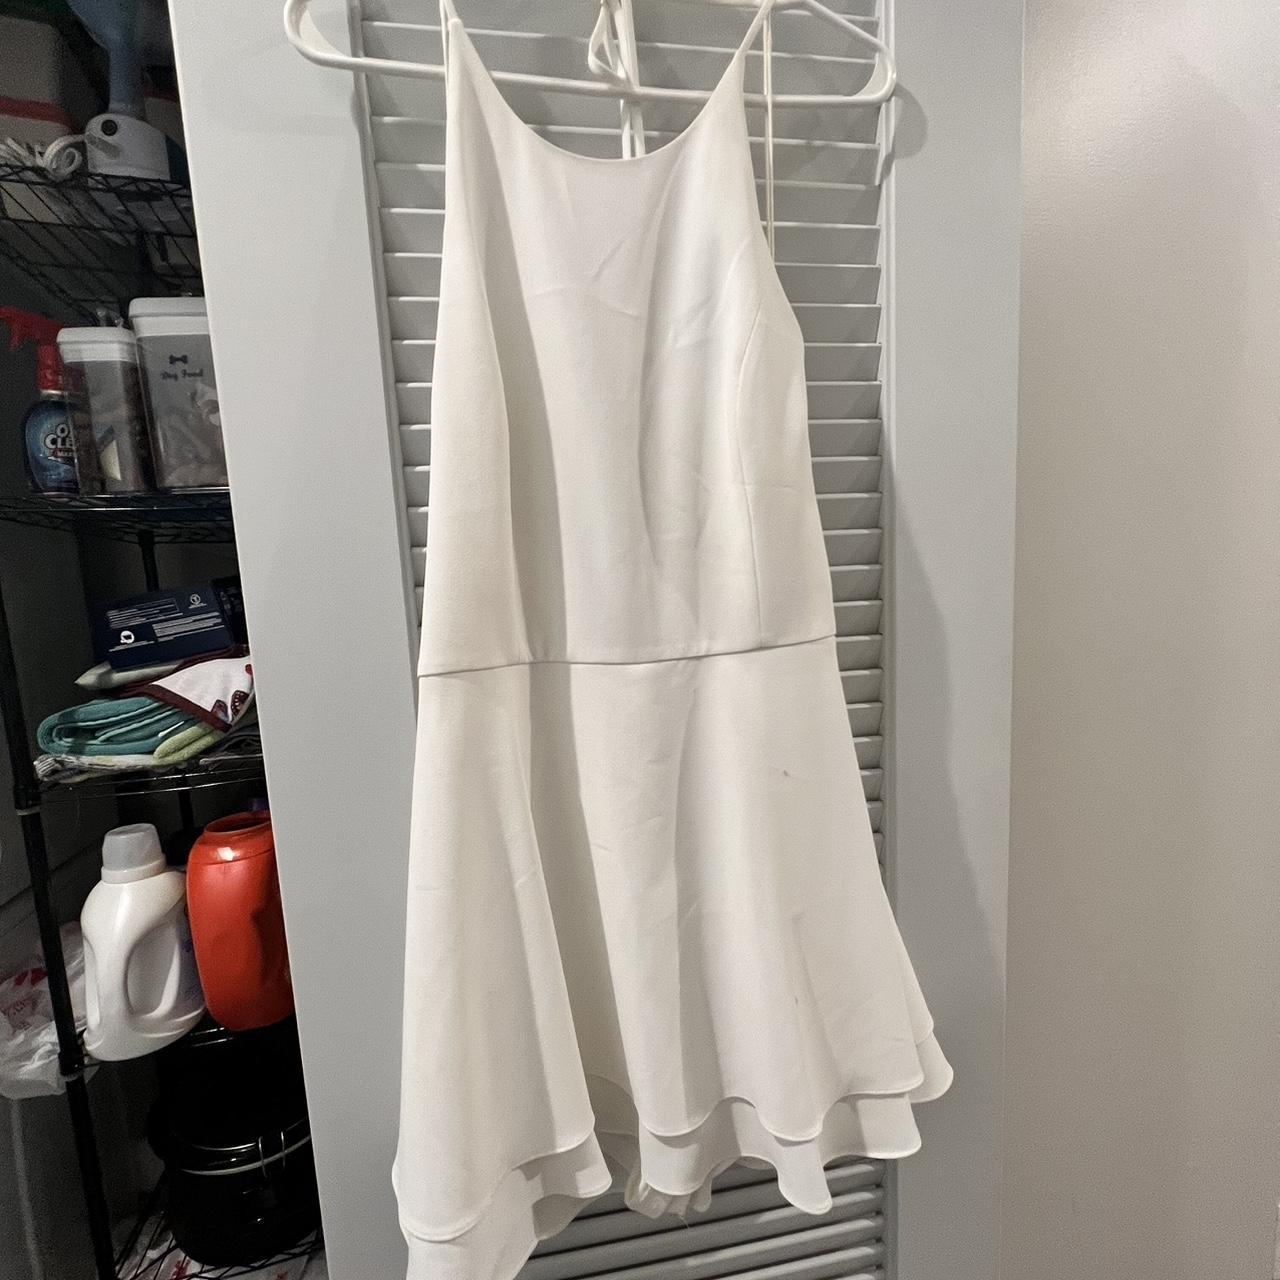 alice + olivia Women's White Dress